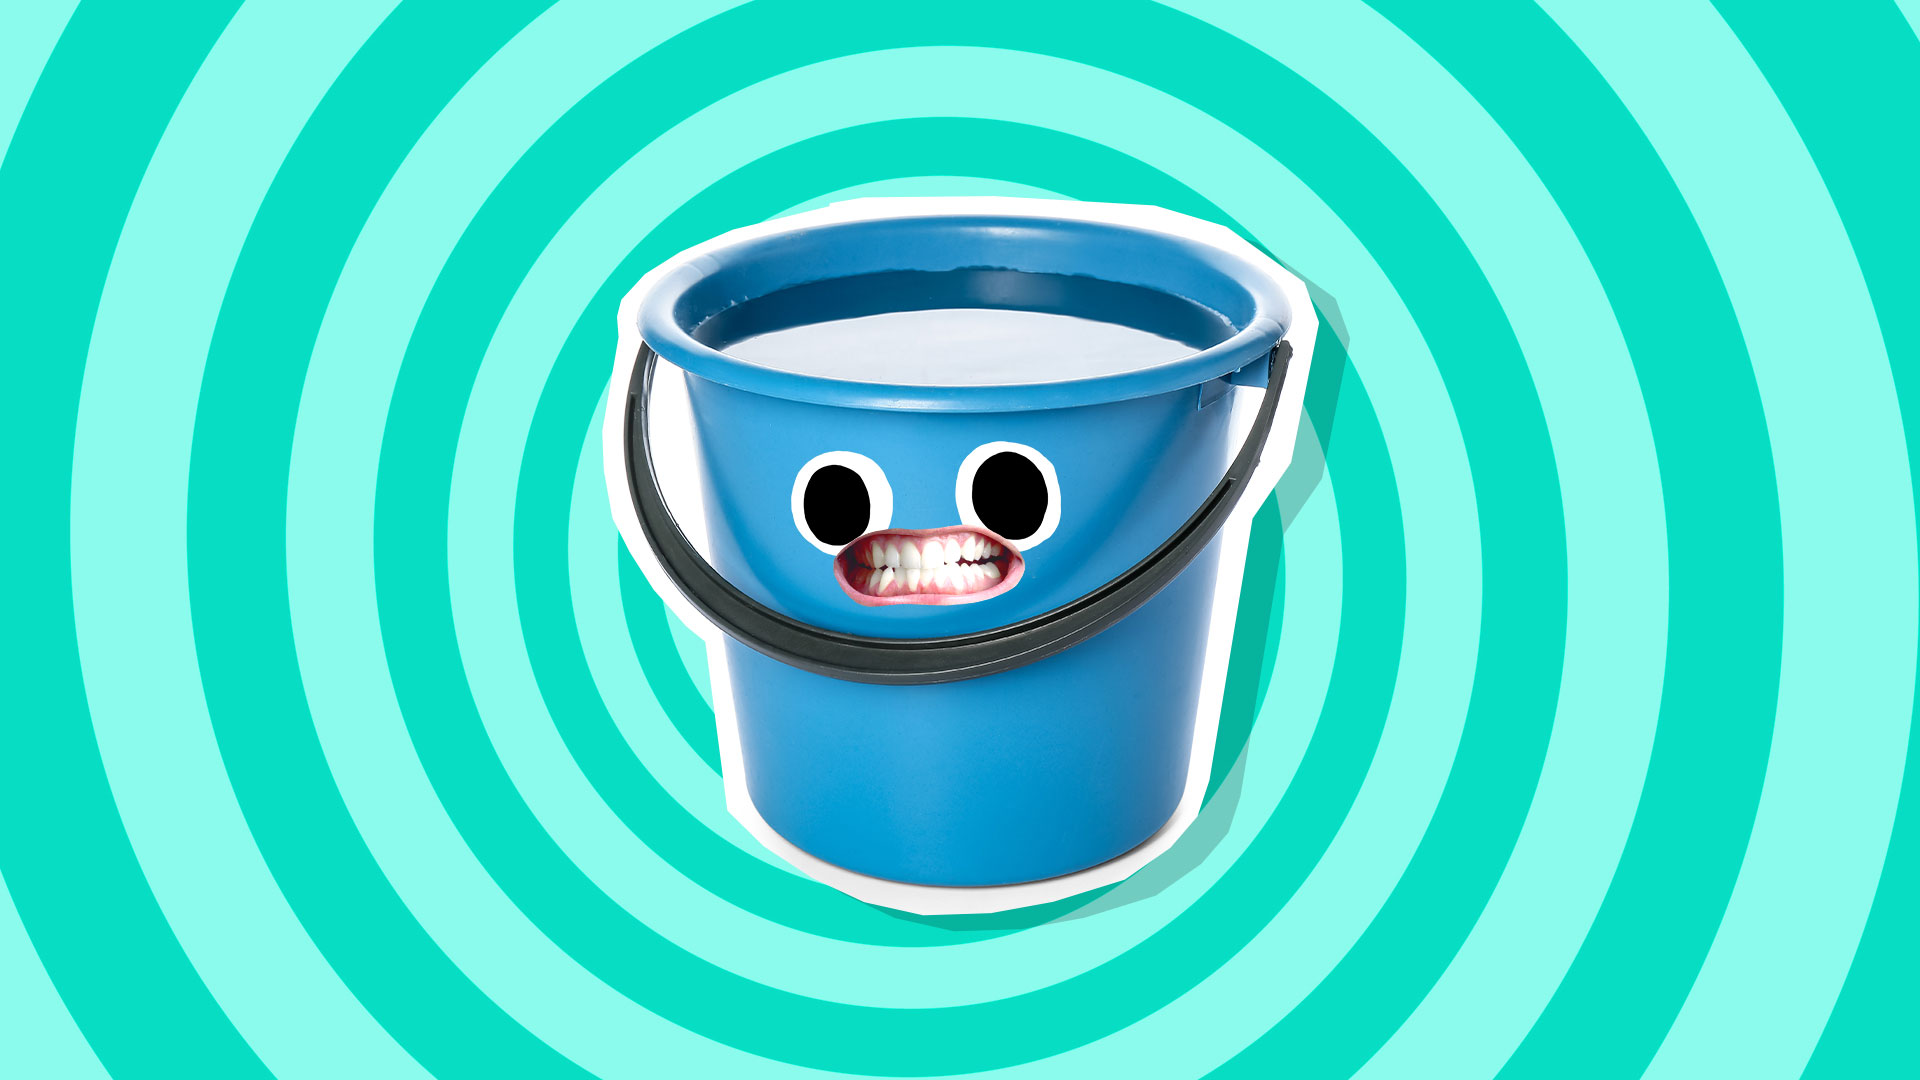 A grinning bucket